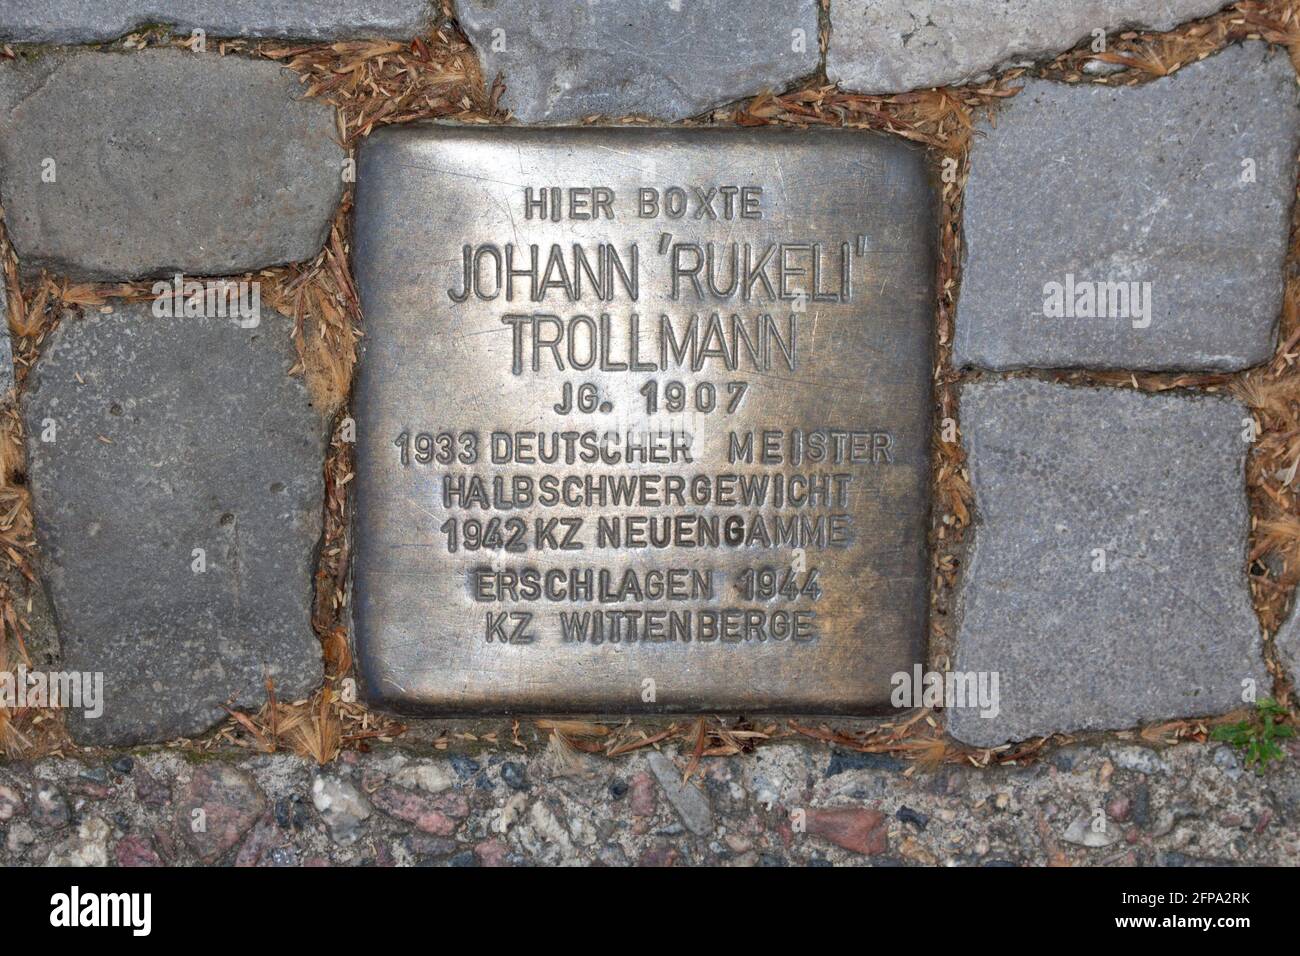 Johann Wilhelm 'Rukeli' Trollmann (born December 27, 1907 in Wilsche near Gifhorn, † 1944 in the camp Wittenberge of the Neuengamme concentration camp Stock Photo